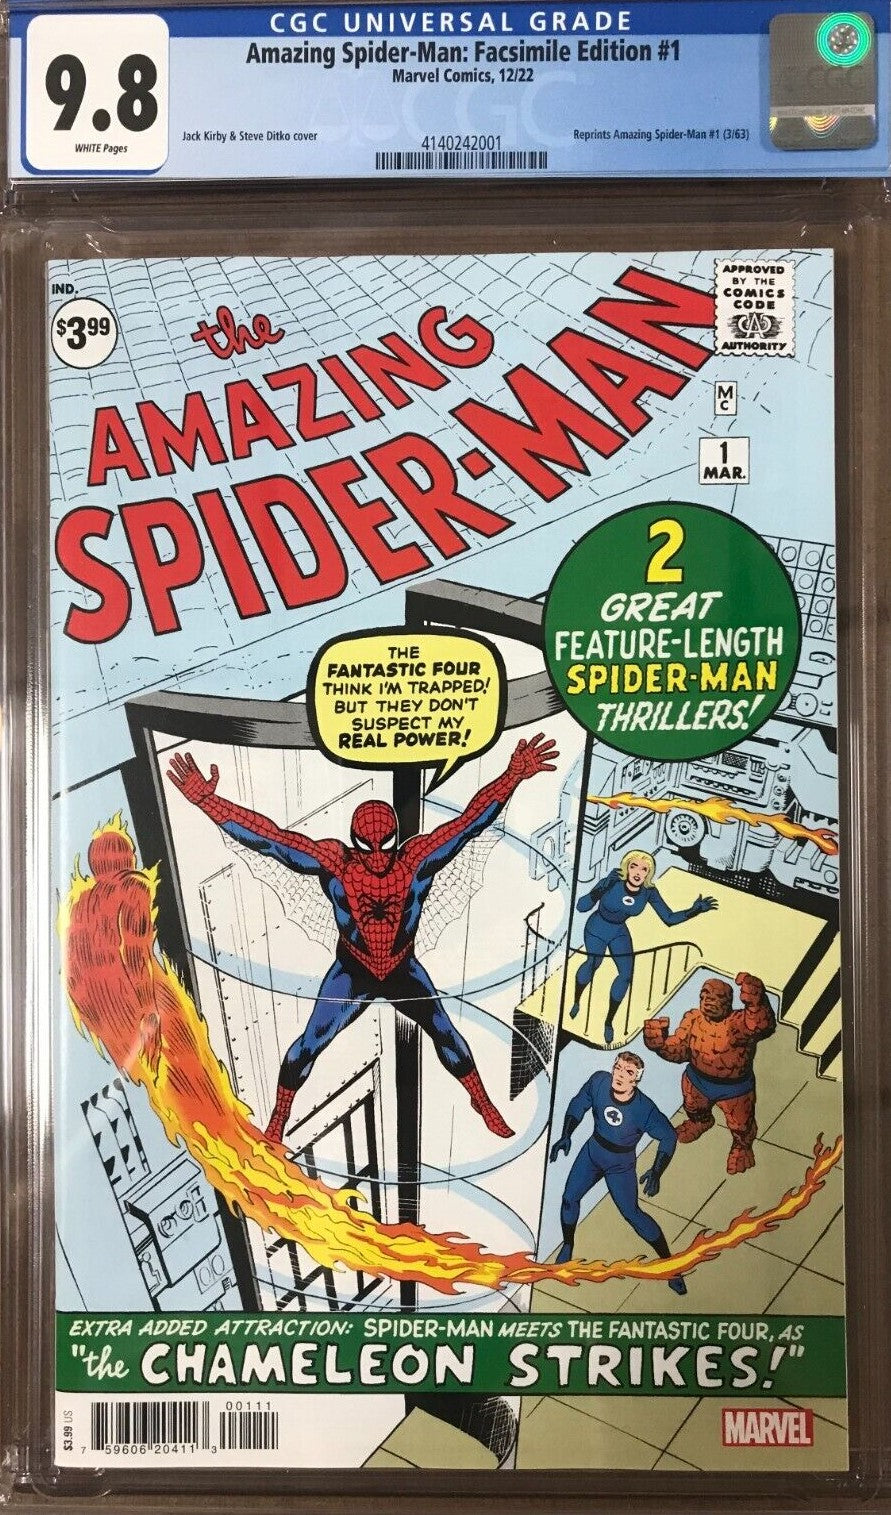 Amazing Spider-Man #1 Facsimile Edition CGC 9.8 (Marvel Comics) - Stan Lee & Steve Ditko